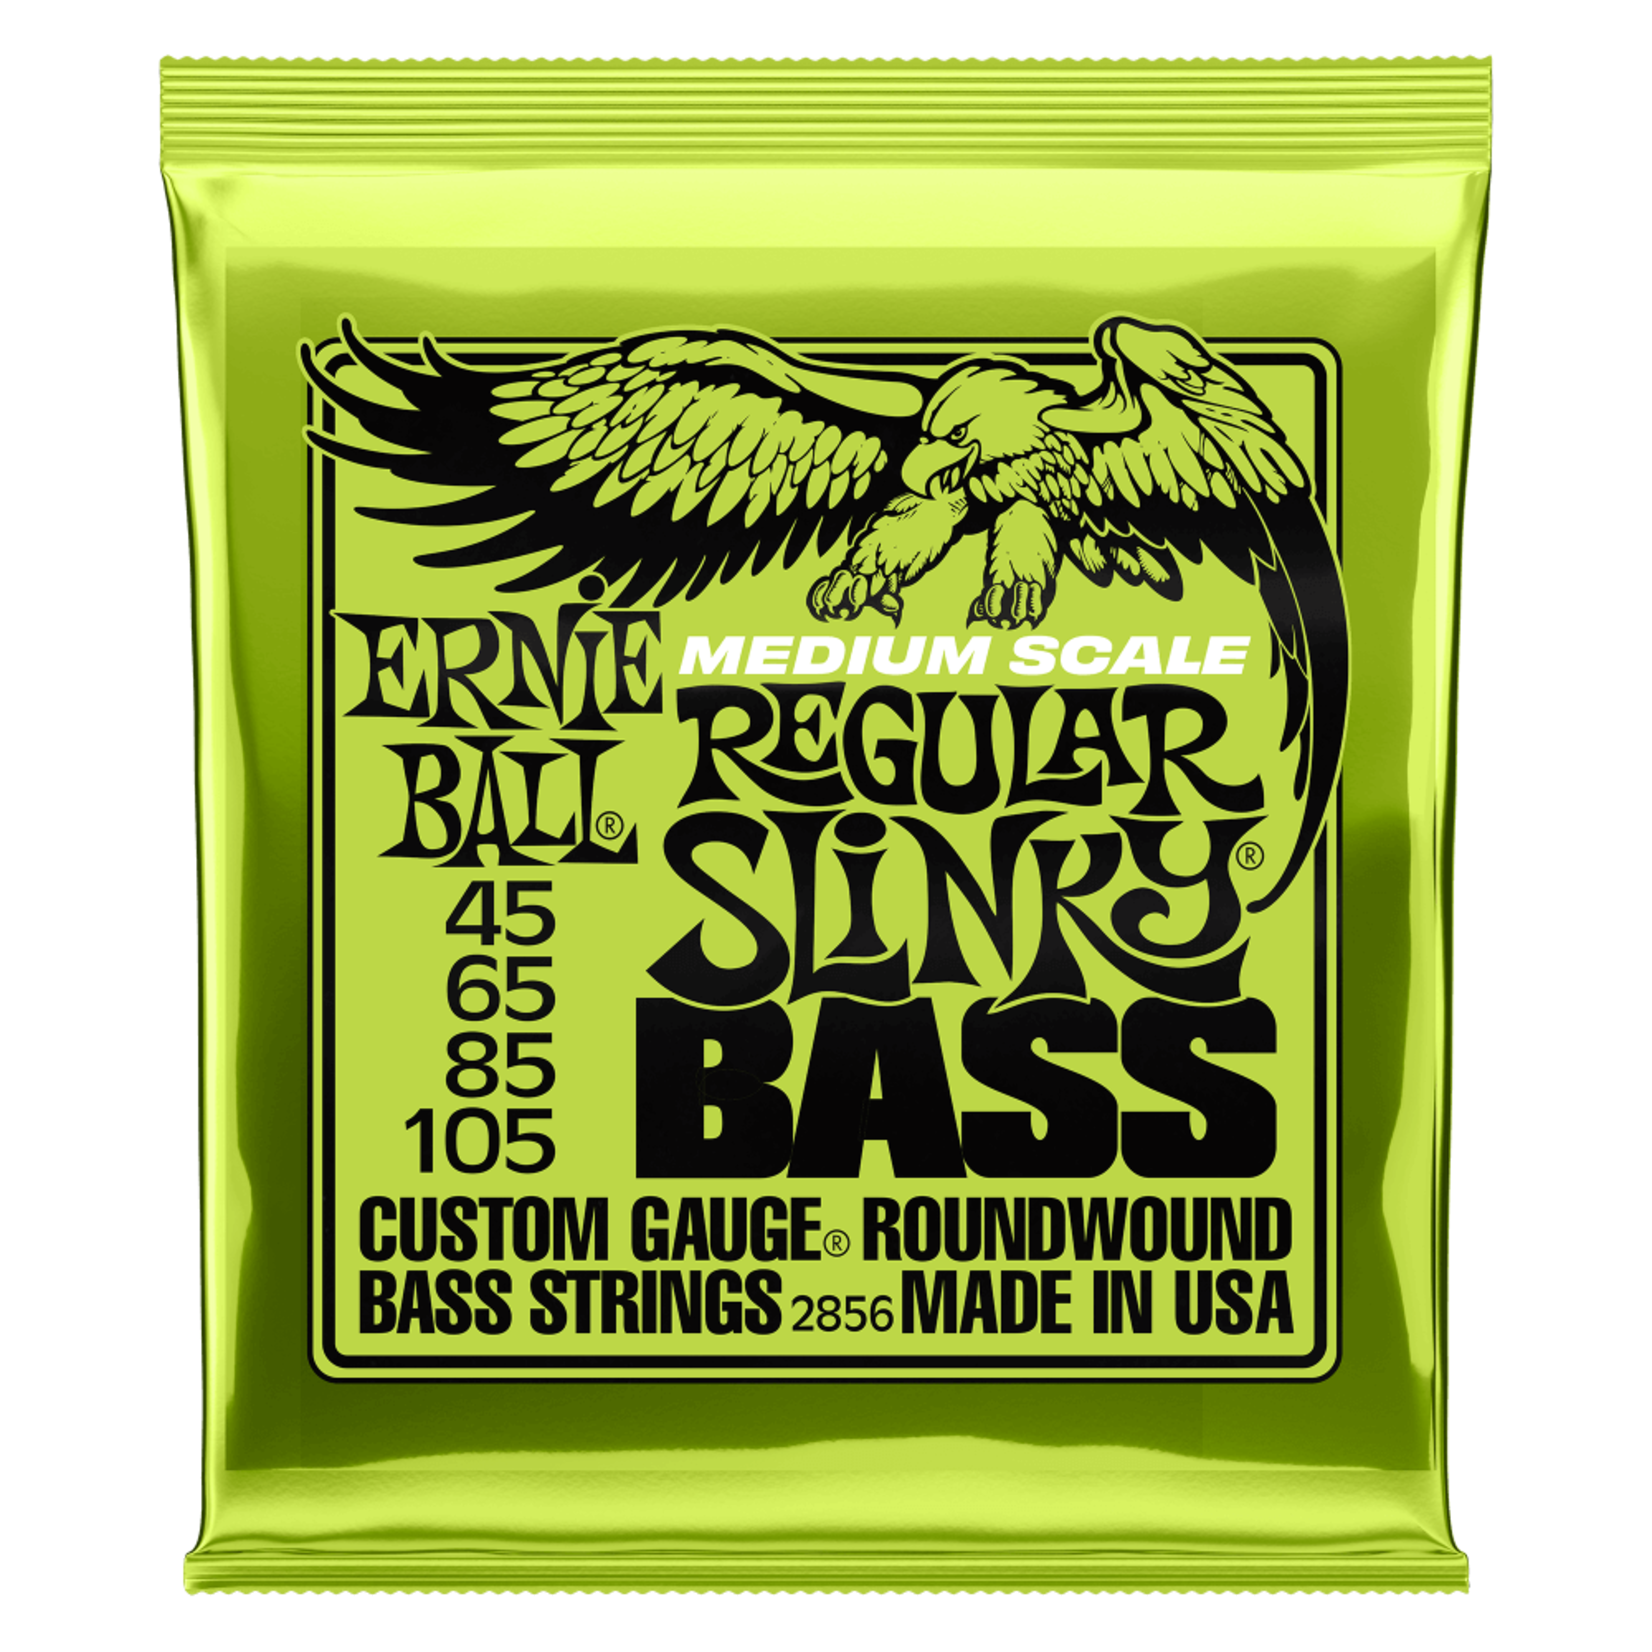 Ernie Ball Regular Slinky Nickel Wound Medium Scale Electric Bass Strings 45-105 Gauge